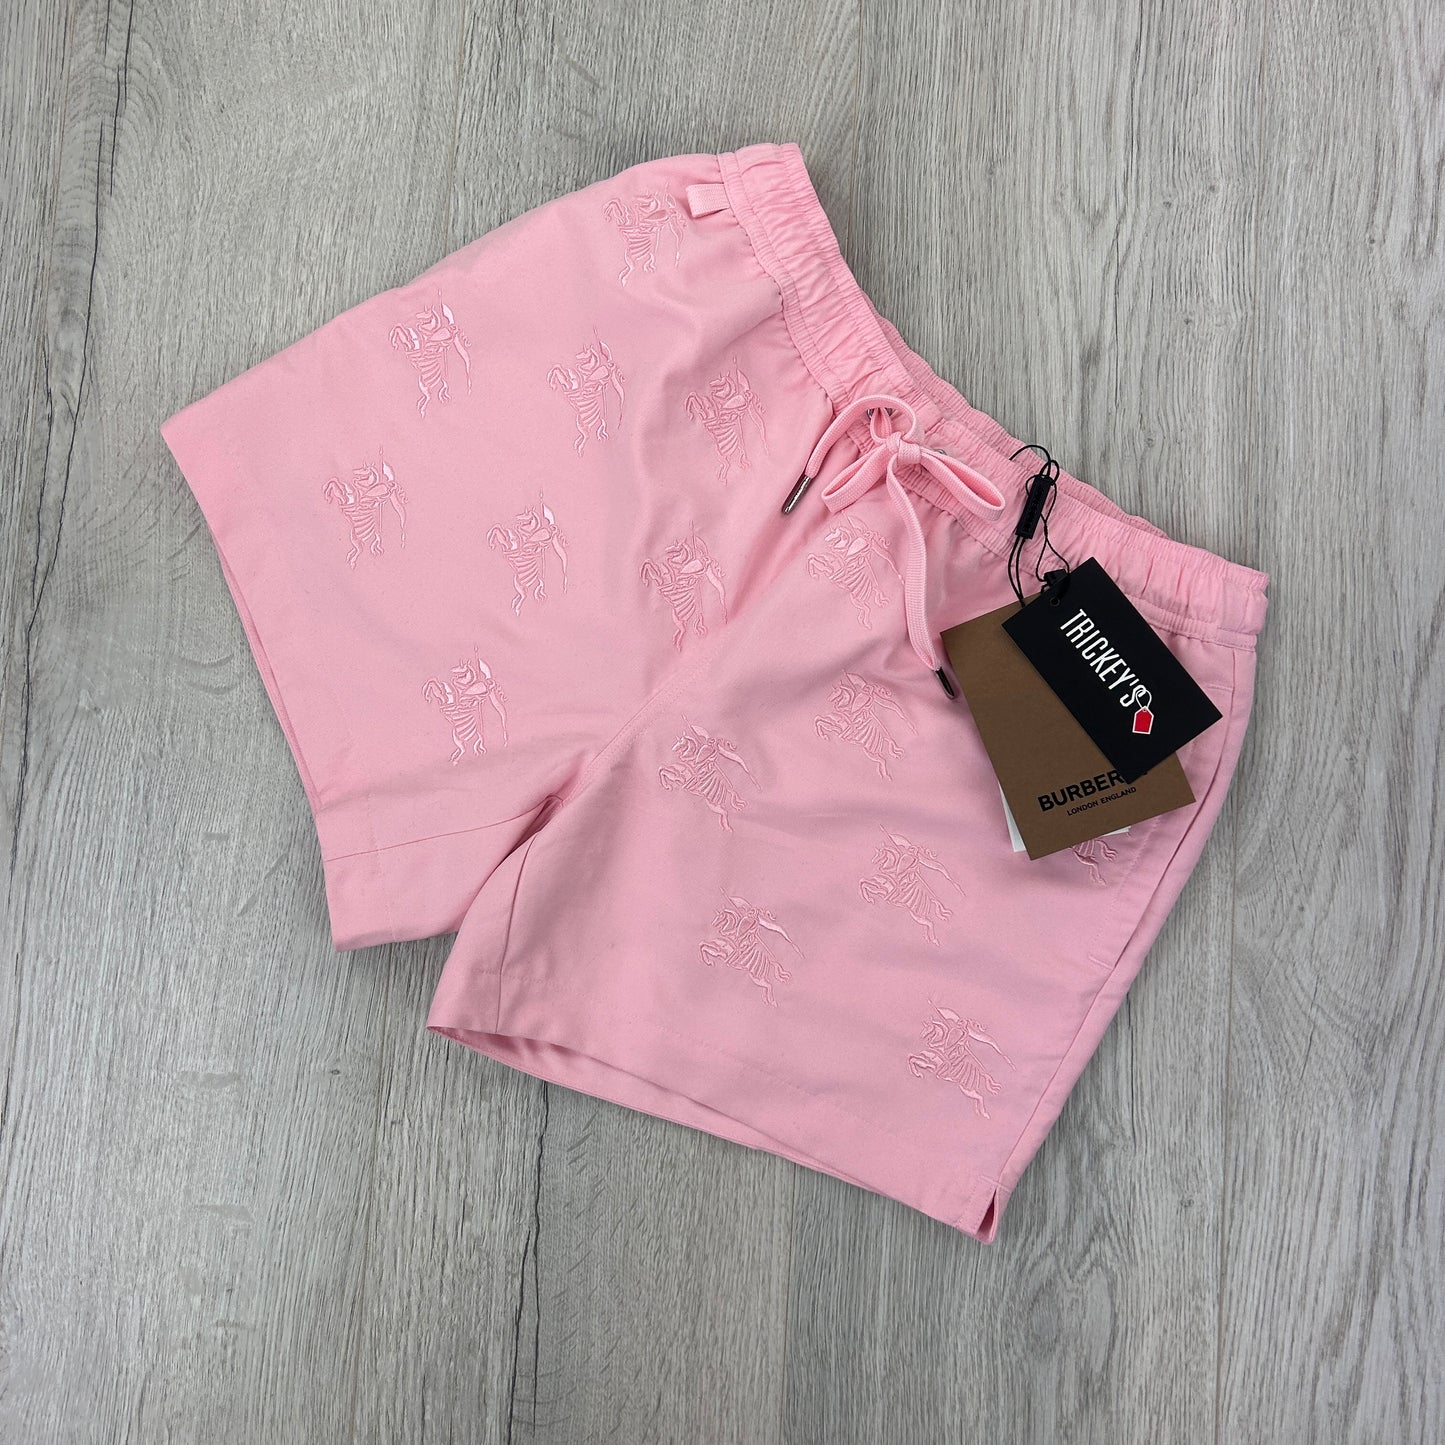 Burberry Men’s Pink Swim Shorts - XS